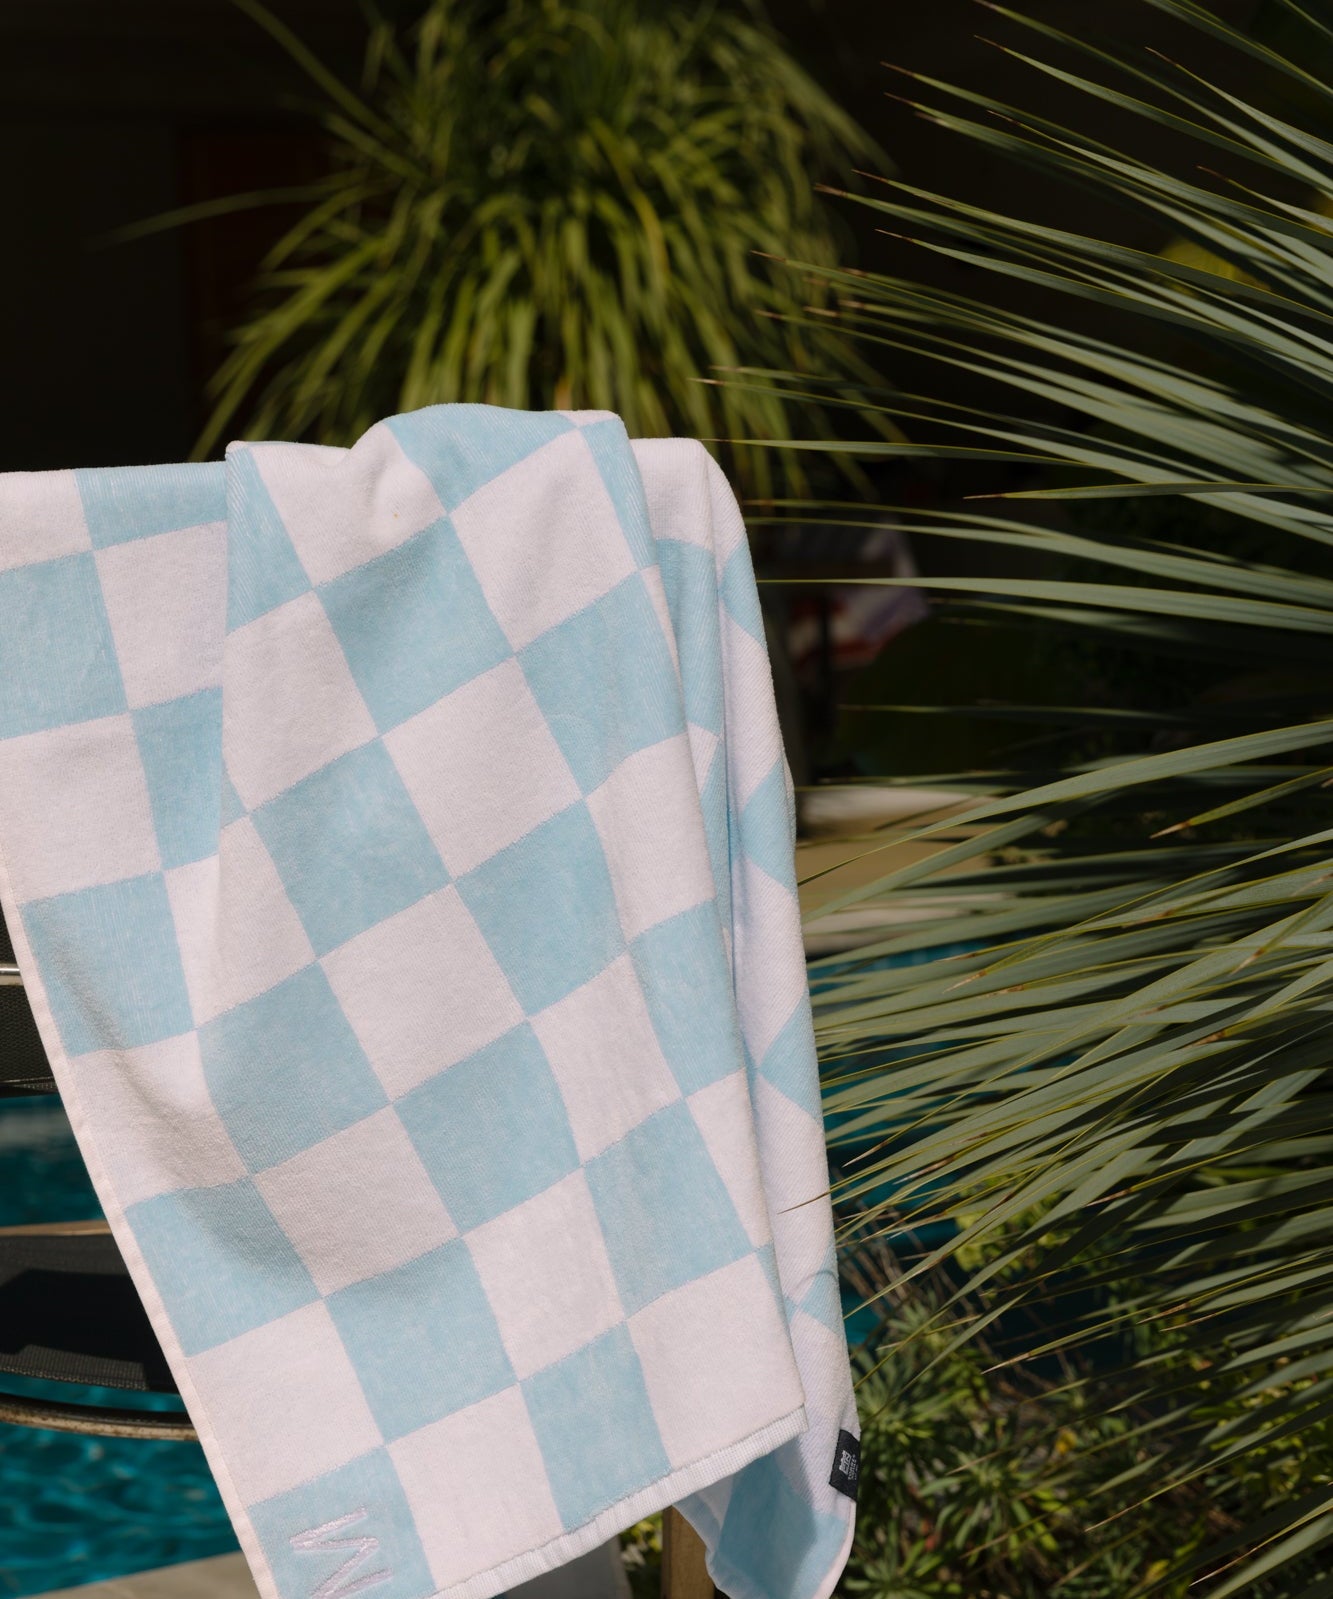 torres-novas-gibalta-beach-towels-checkers-product-embroidery-blue-1_8015a396-8d49-48f7-8bc7-06daaa3a0d66.jpg